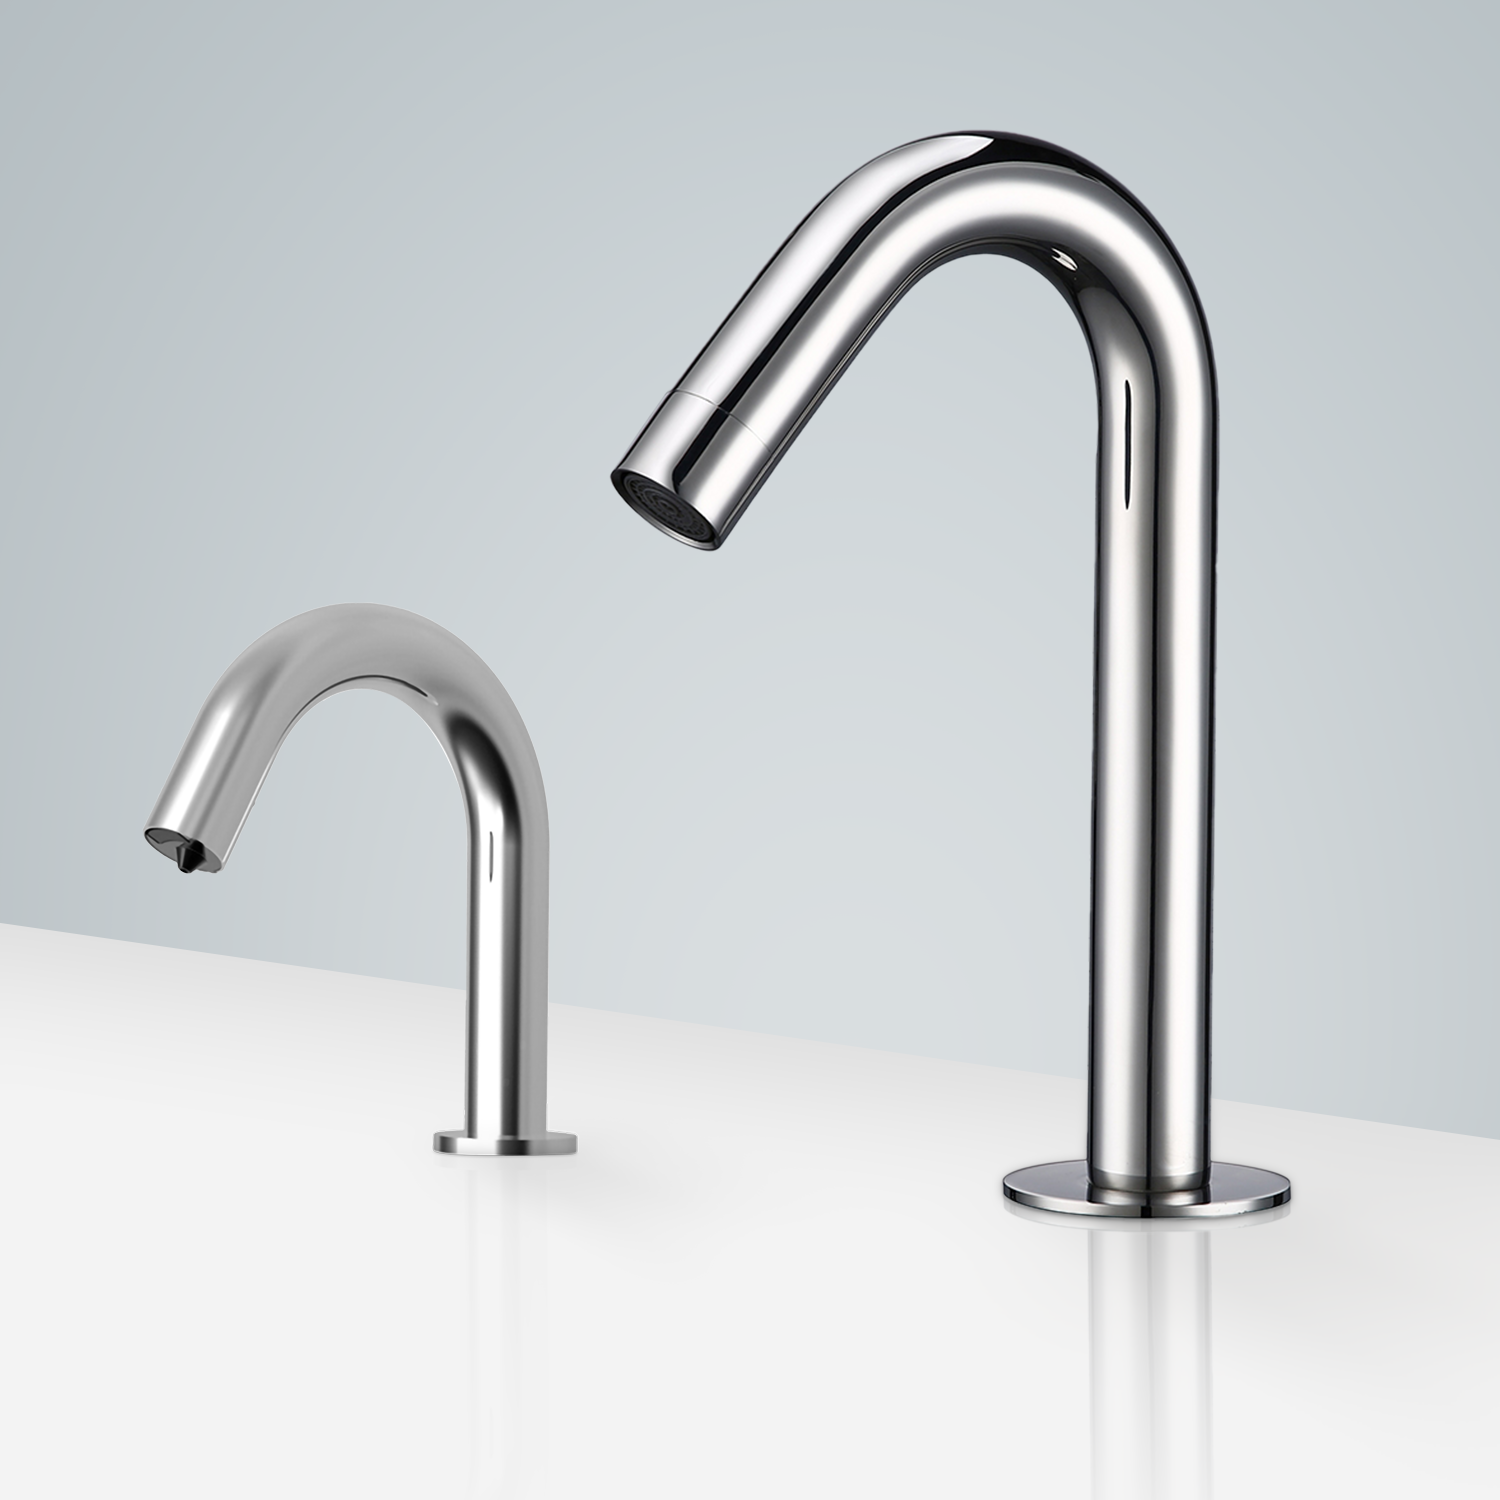 Fontana Bavaria Commercial Chrome Touchless Motion Sensor Faucet & Automatic Soap Dispenser For Restrooms